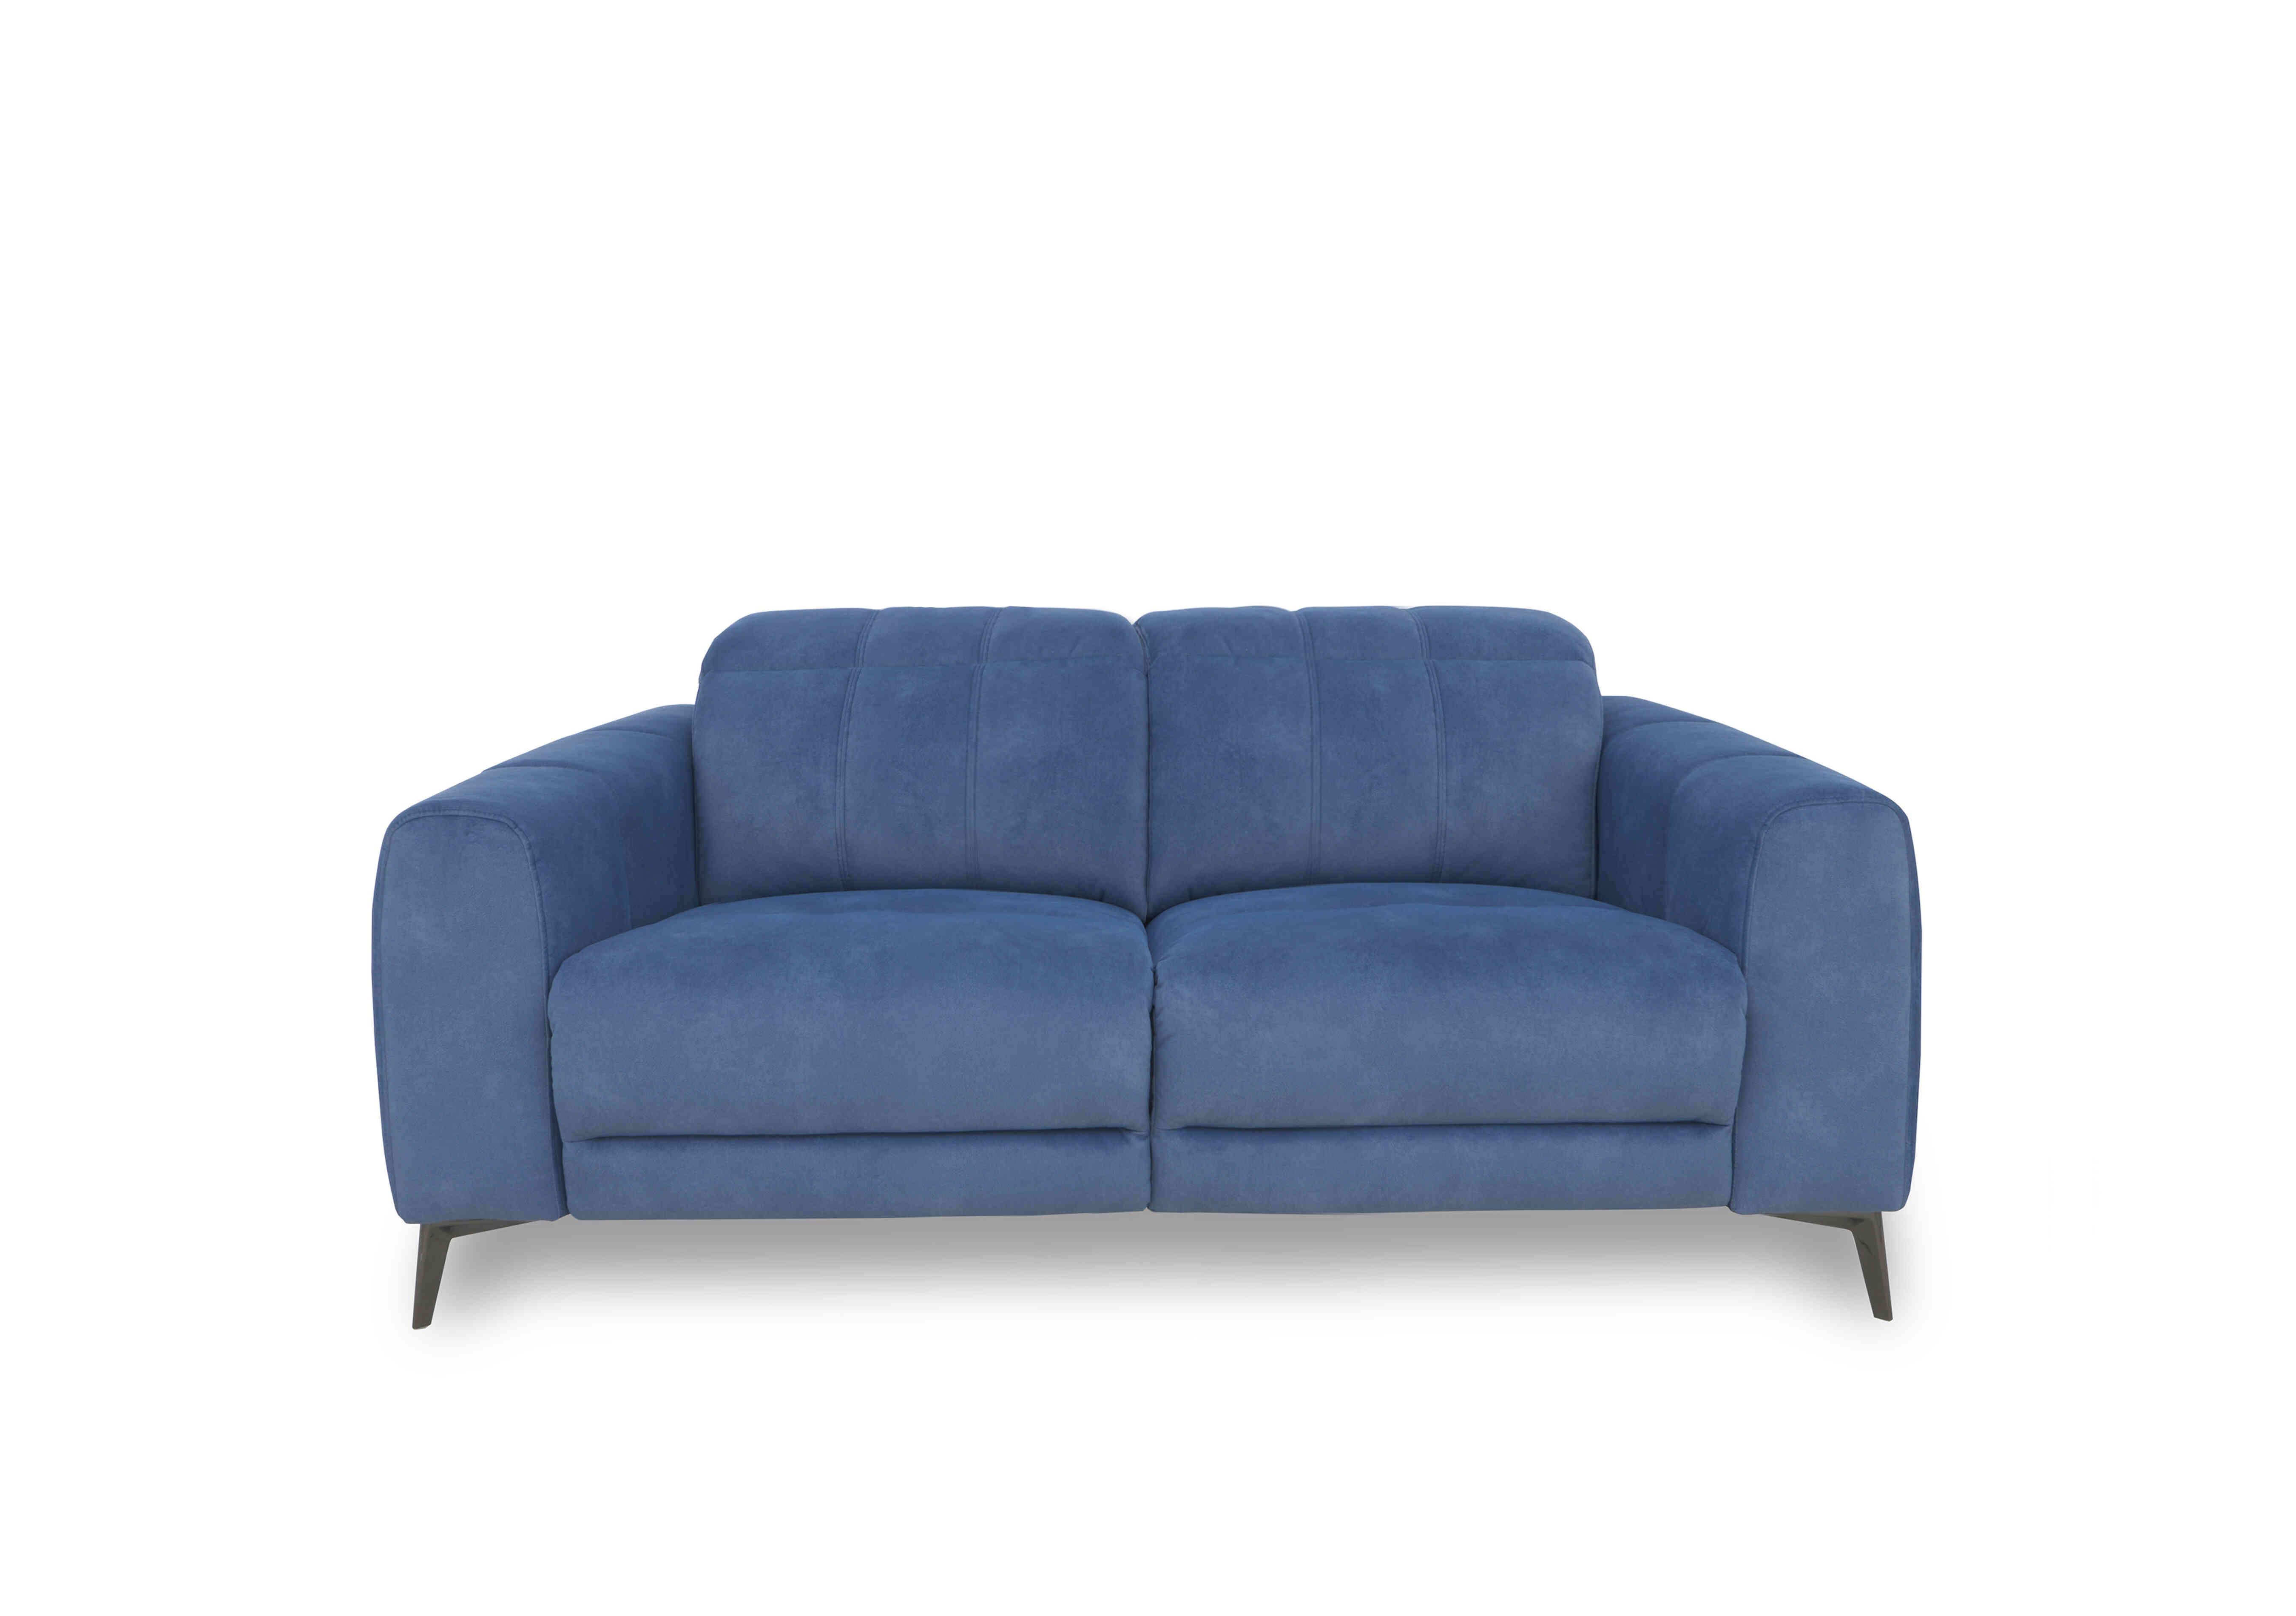 Ezra 2 Seater Fabric Sofa in Dexter 43525 Wave on Furniture Village